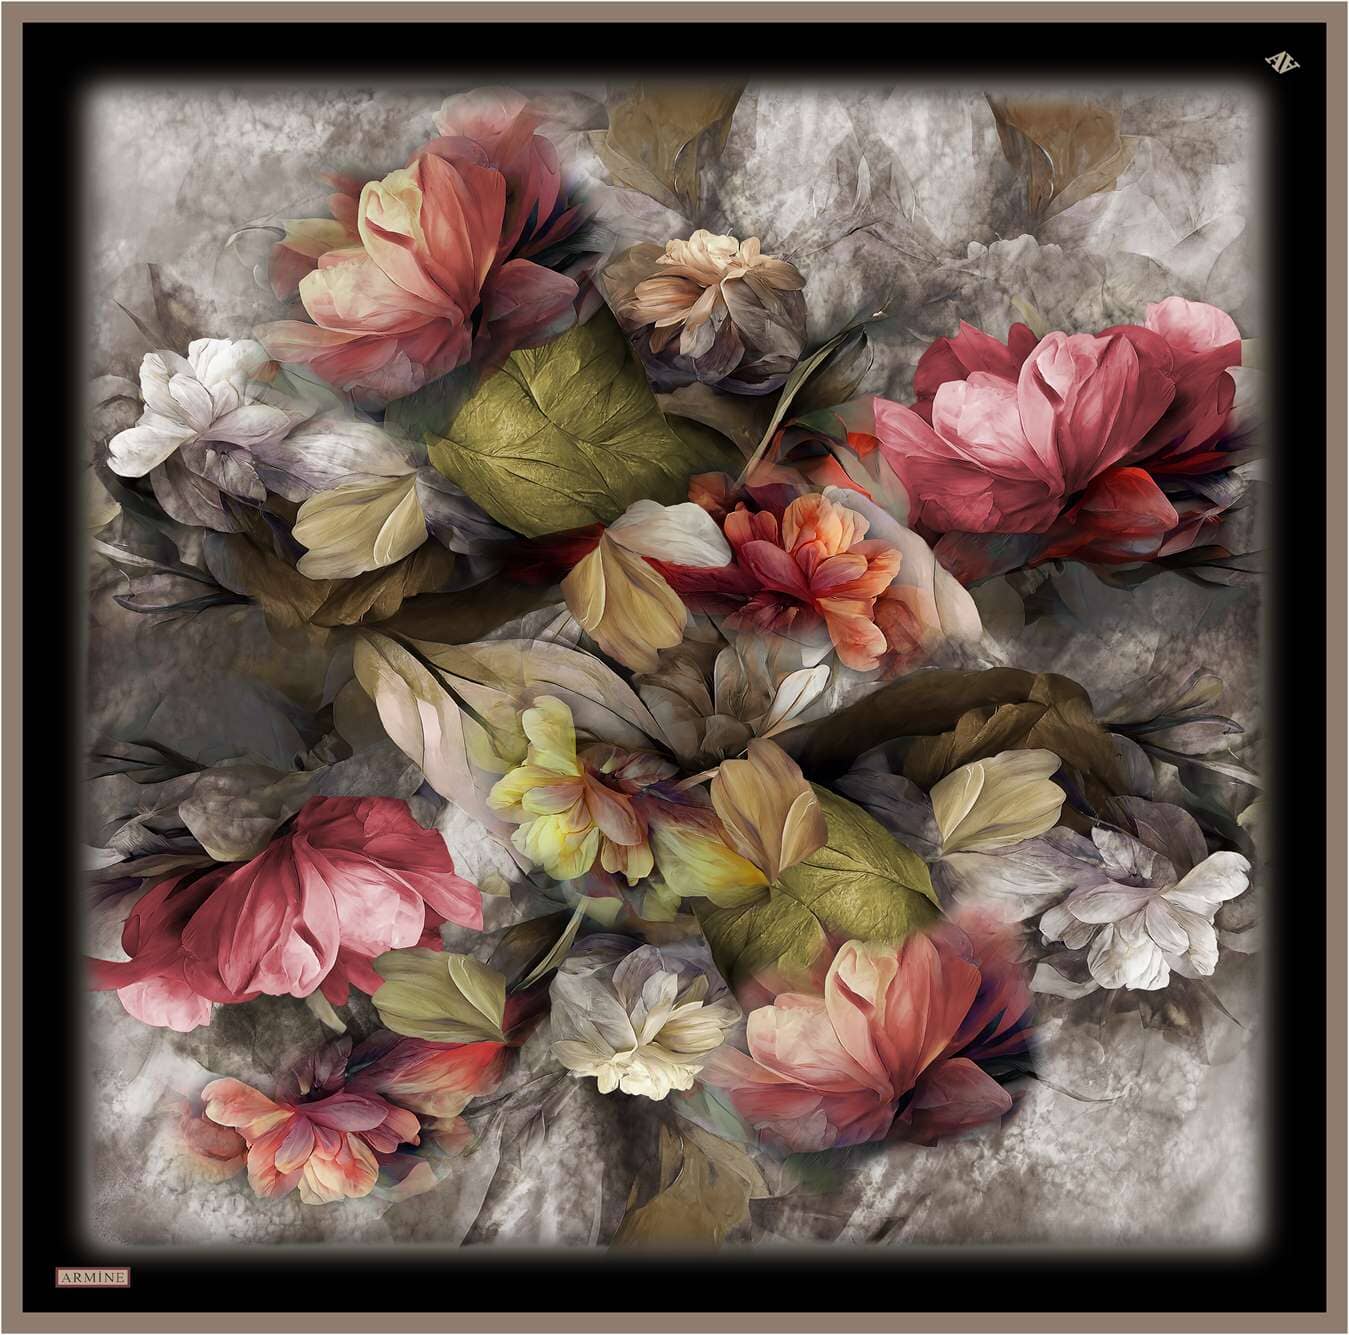 Armine Nocturne Floral Silk Scarf 